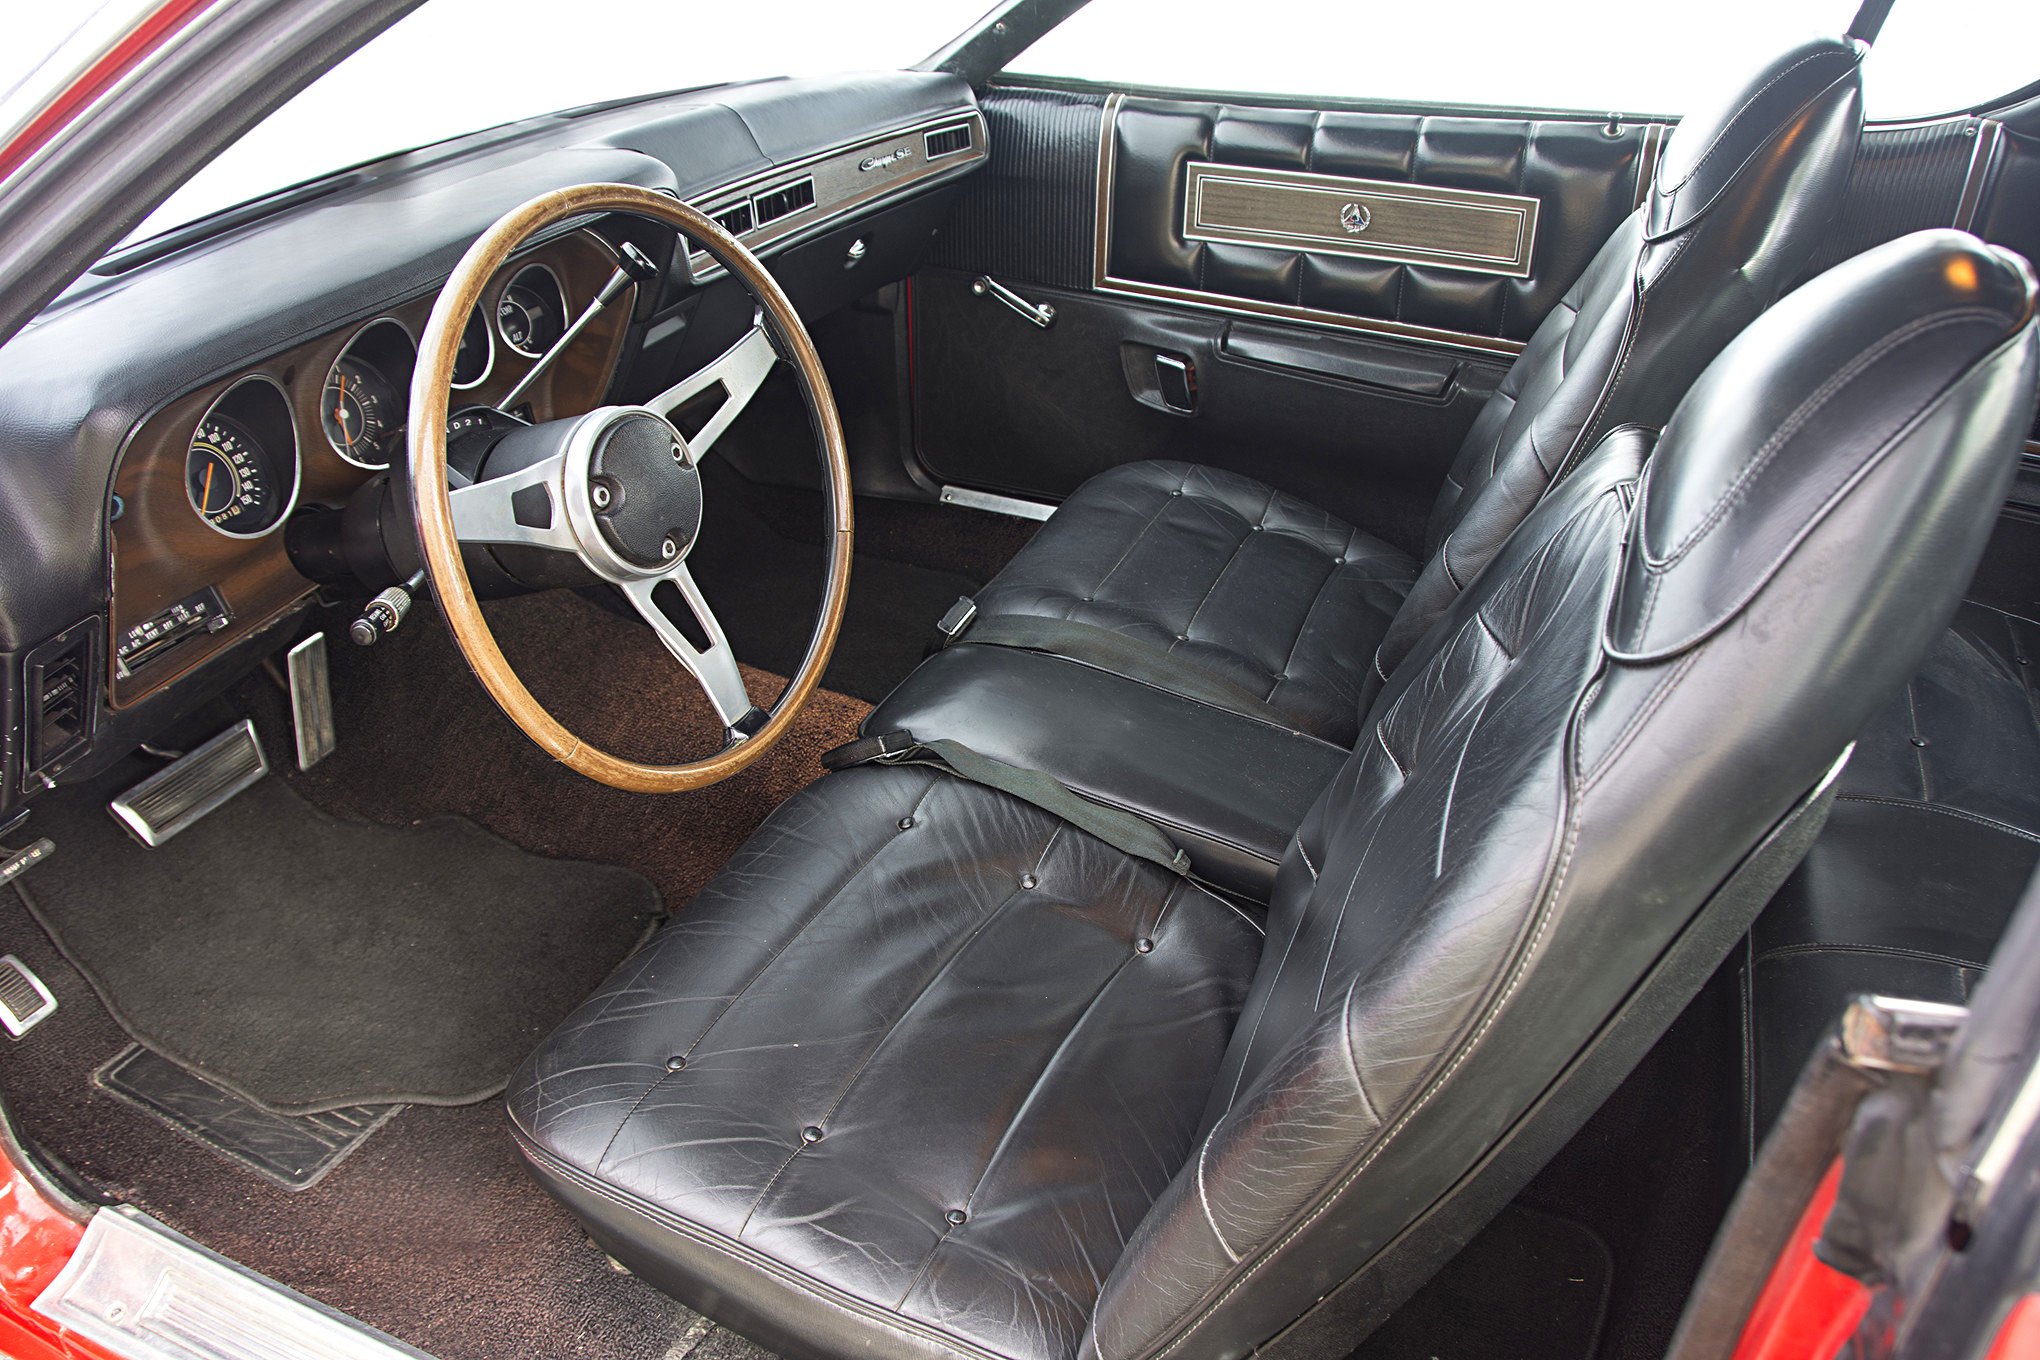 1971 dodge charger se interior black leather seats Wallpaper